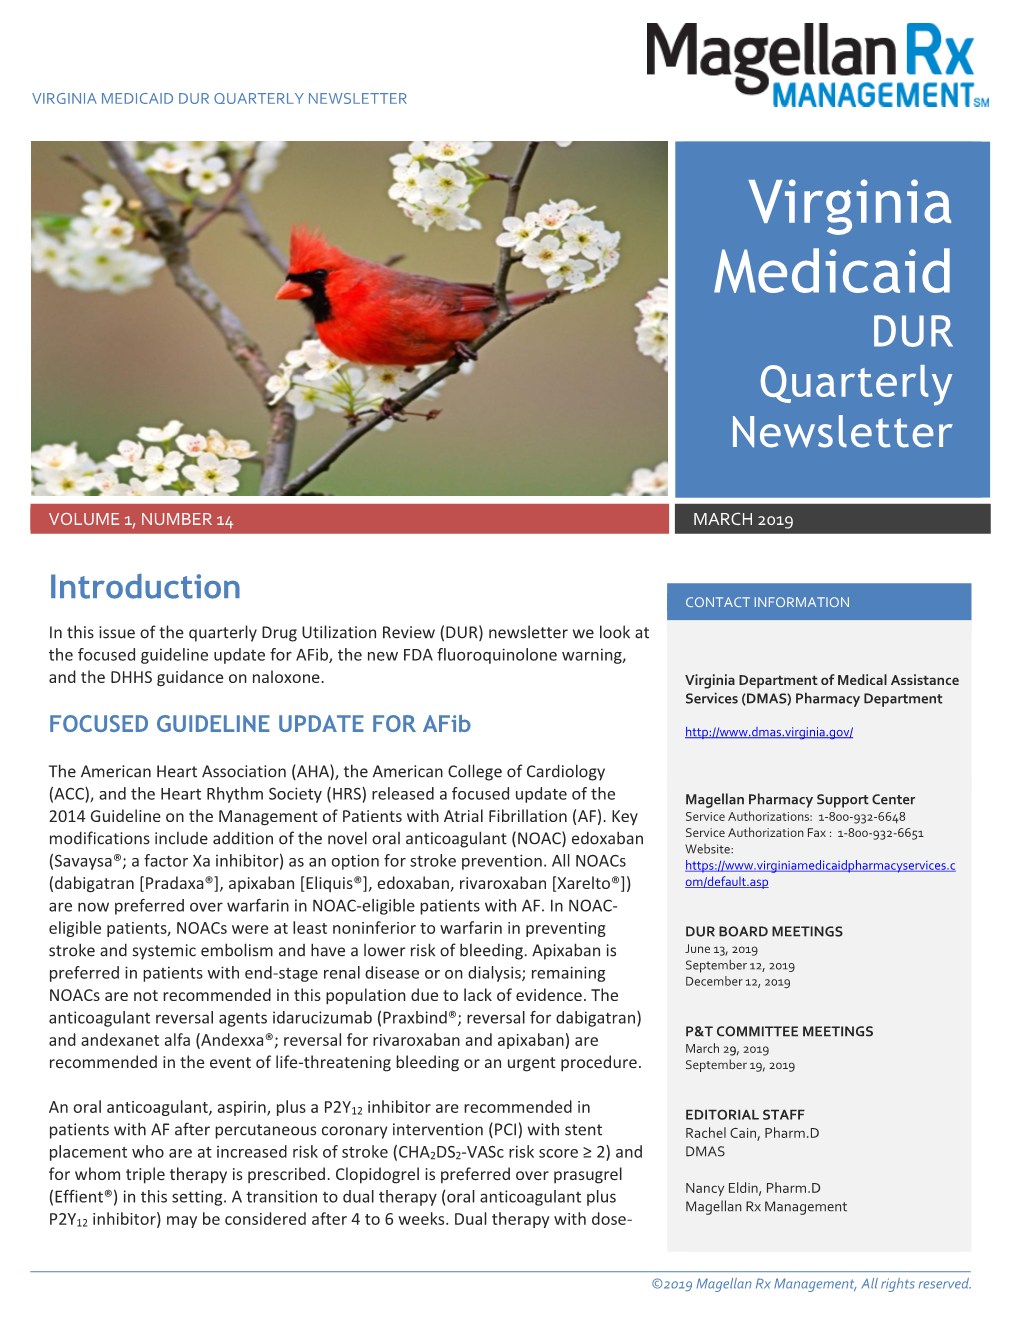 Virginia DUR Quarterly Newsletter